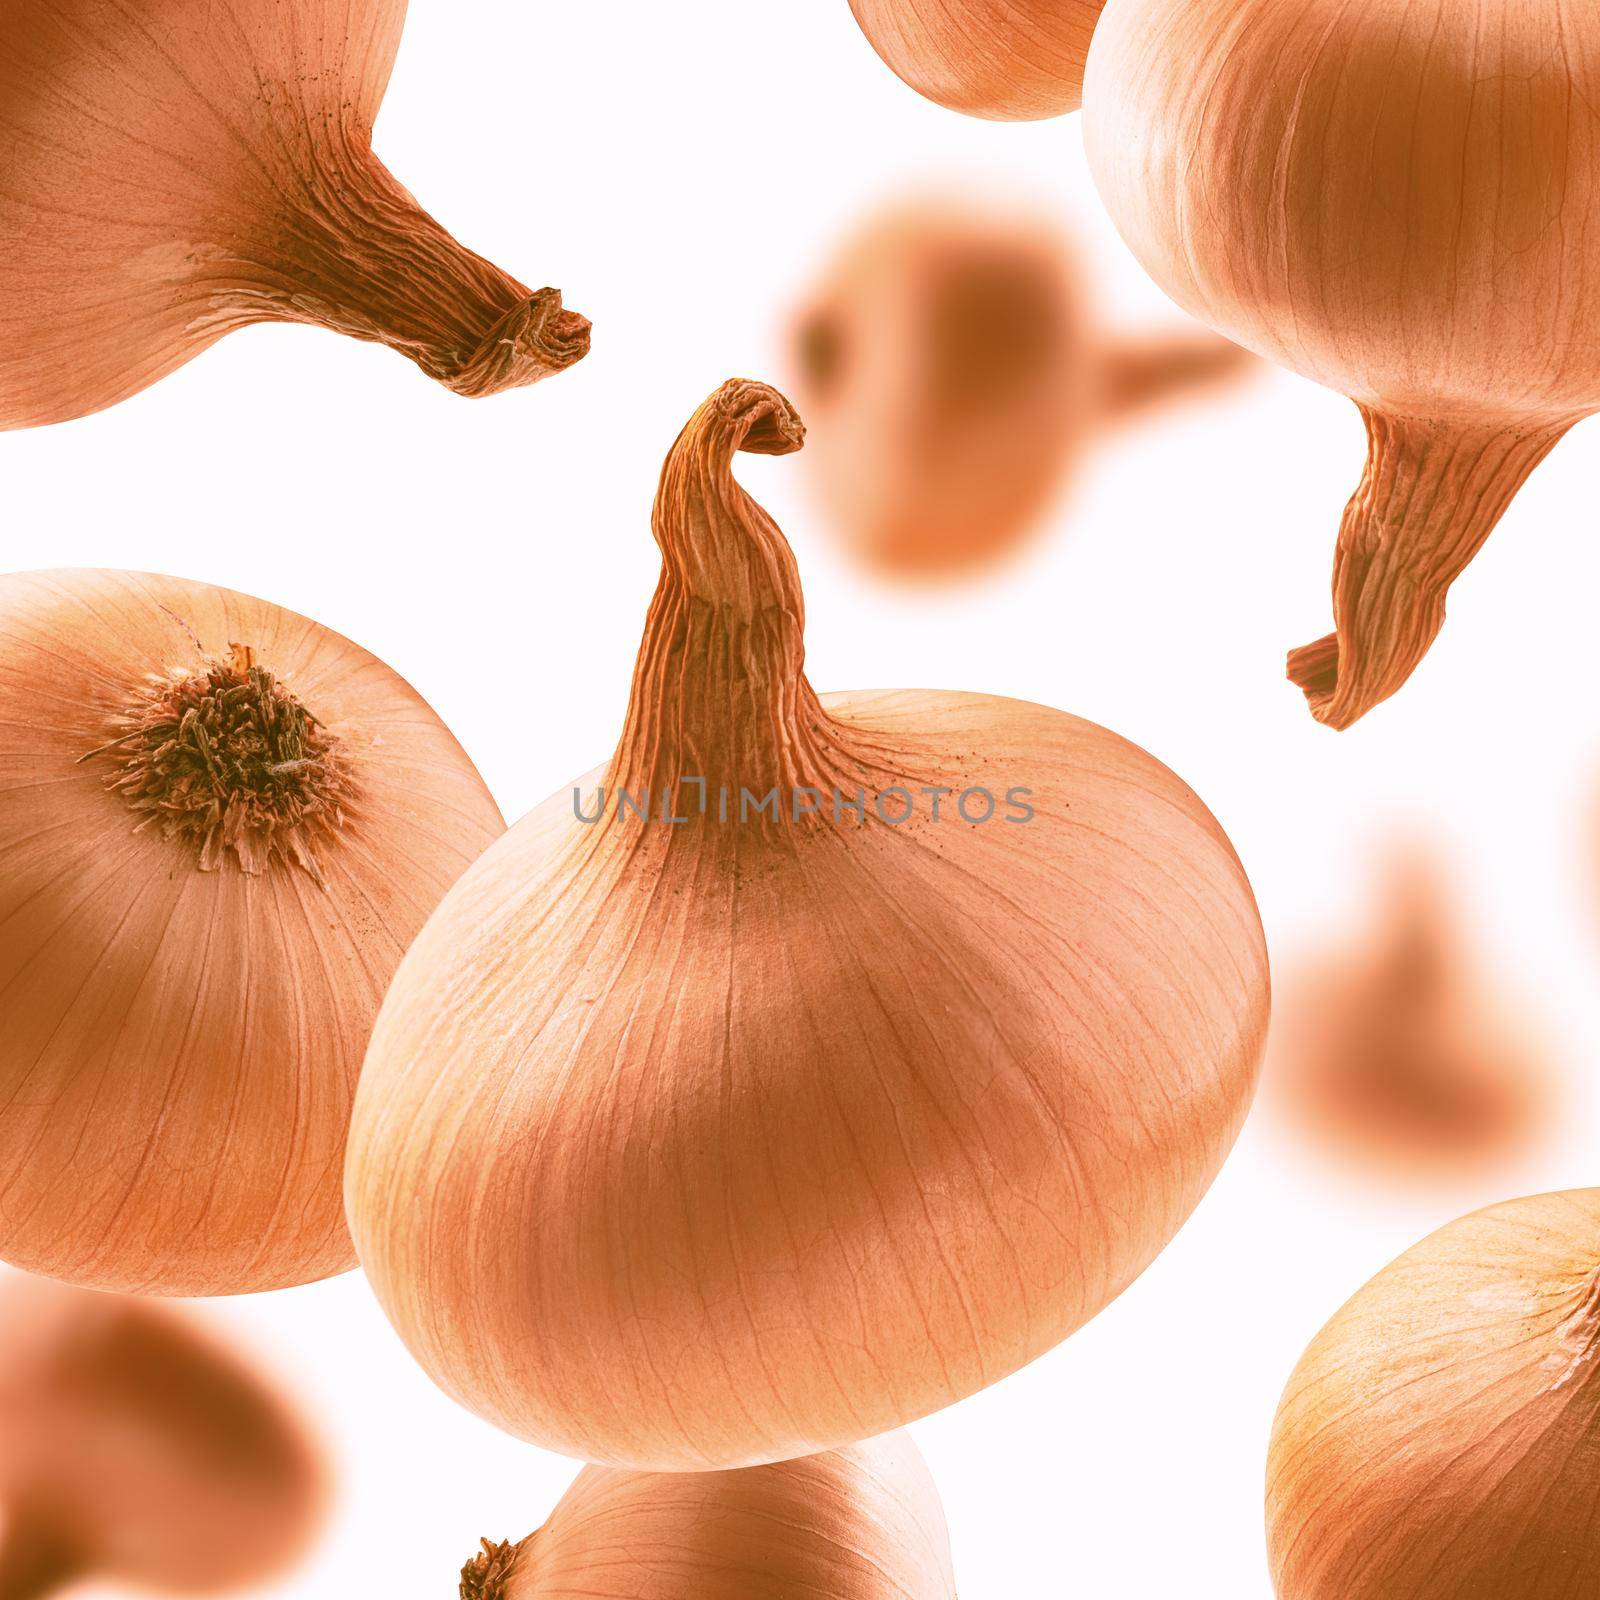 Ripe Golden onion levitates on a white background.